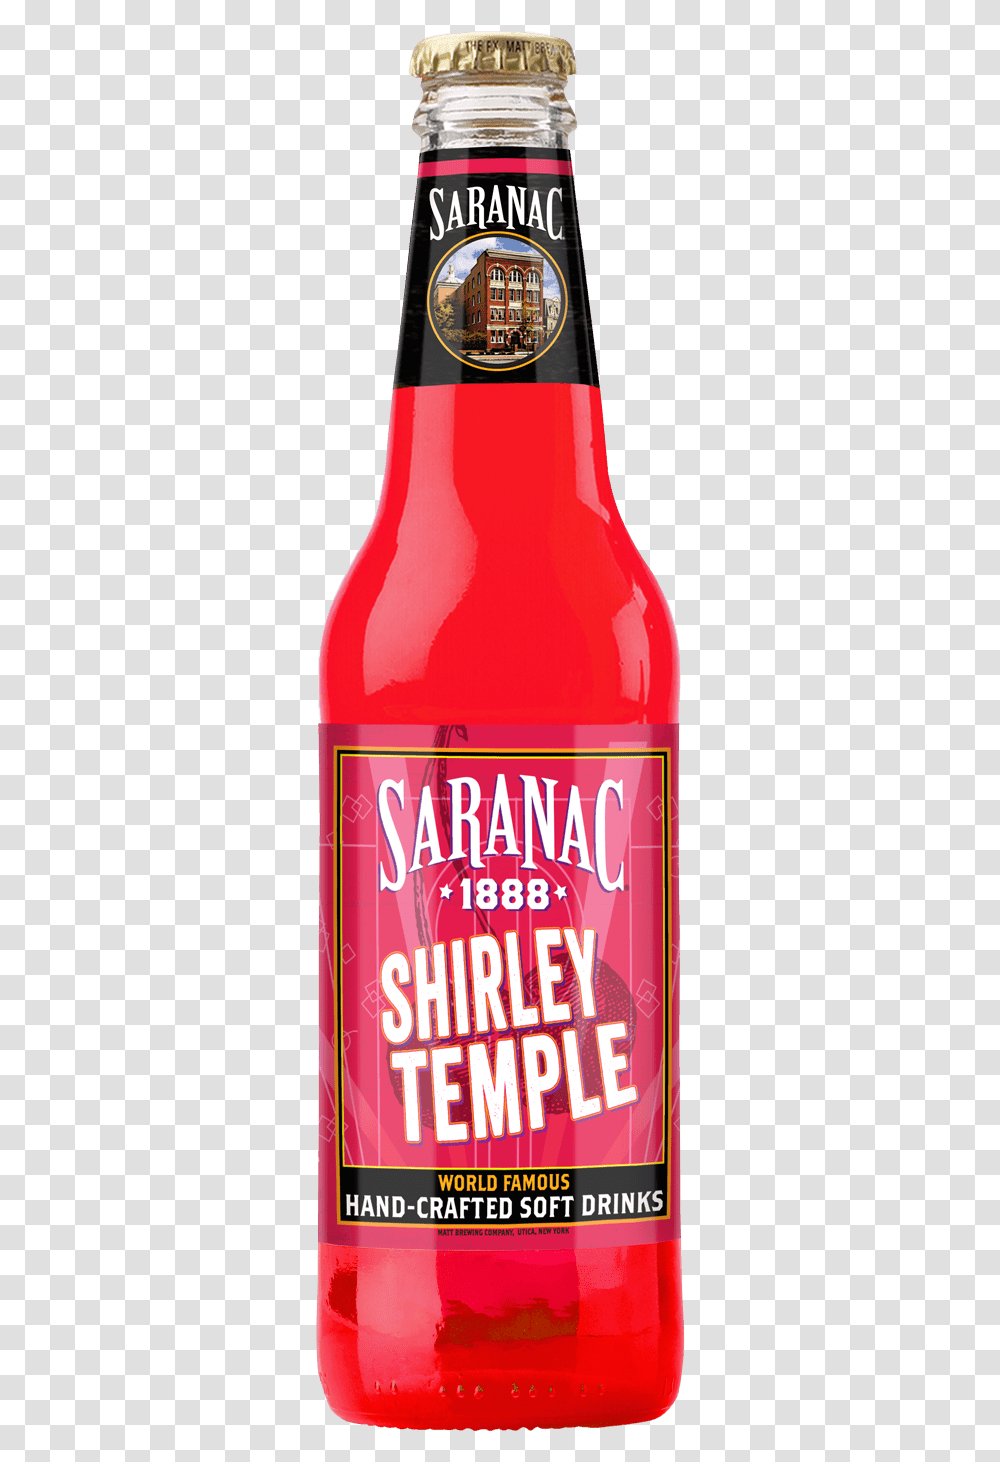 Saranac 1888 Shirley Temple Bottle Saranac Soda, Absinthe, Liquor, Alcohol, Beverage Transparent Png